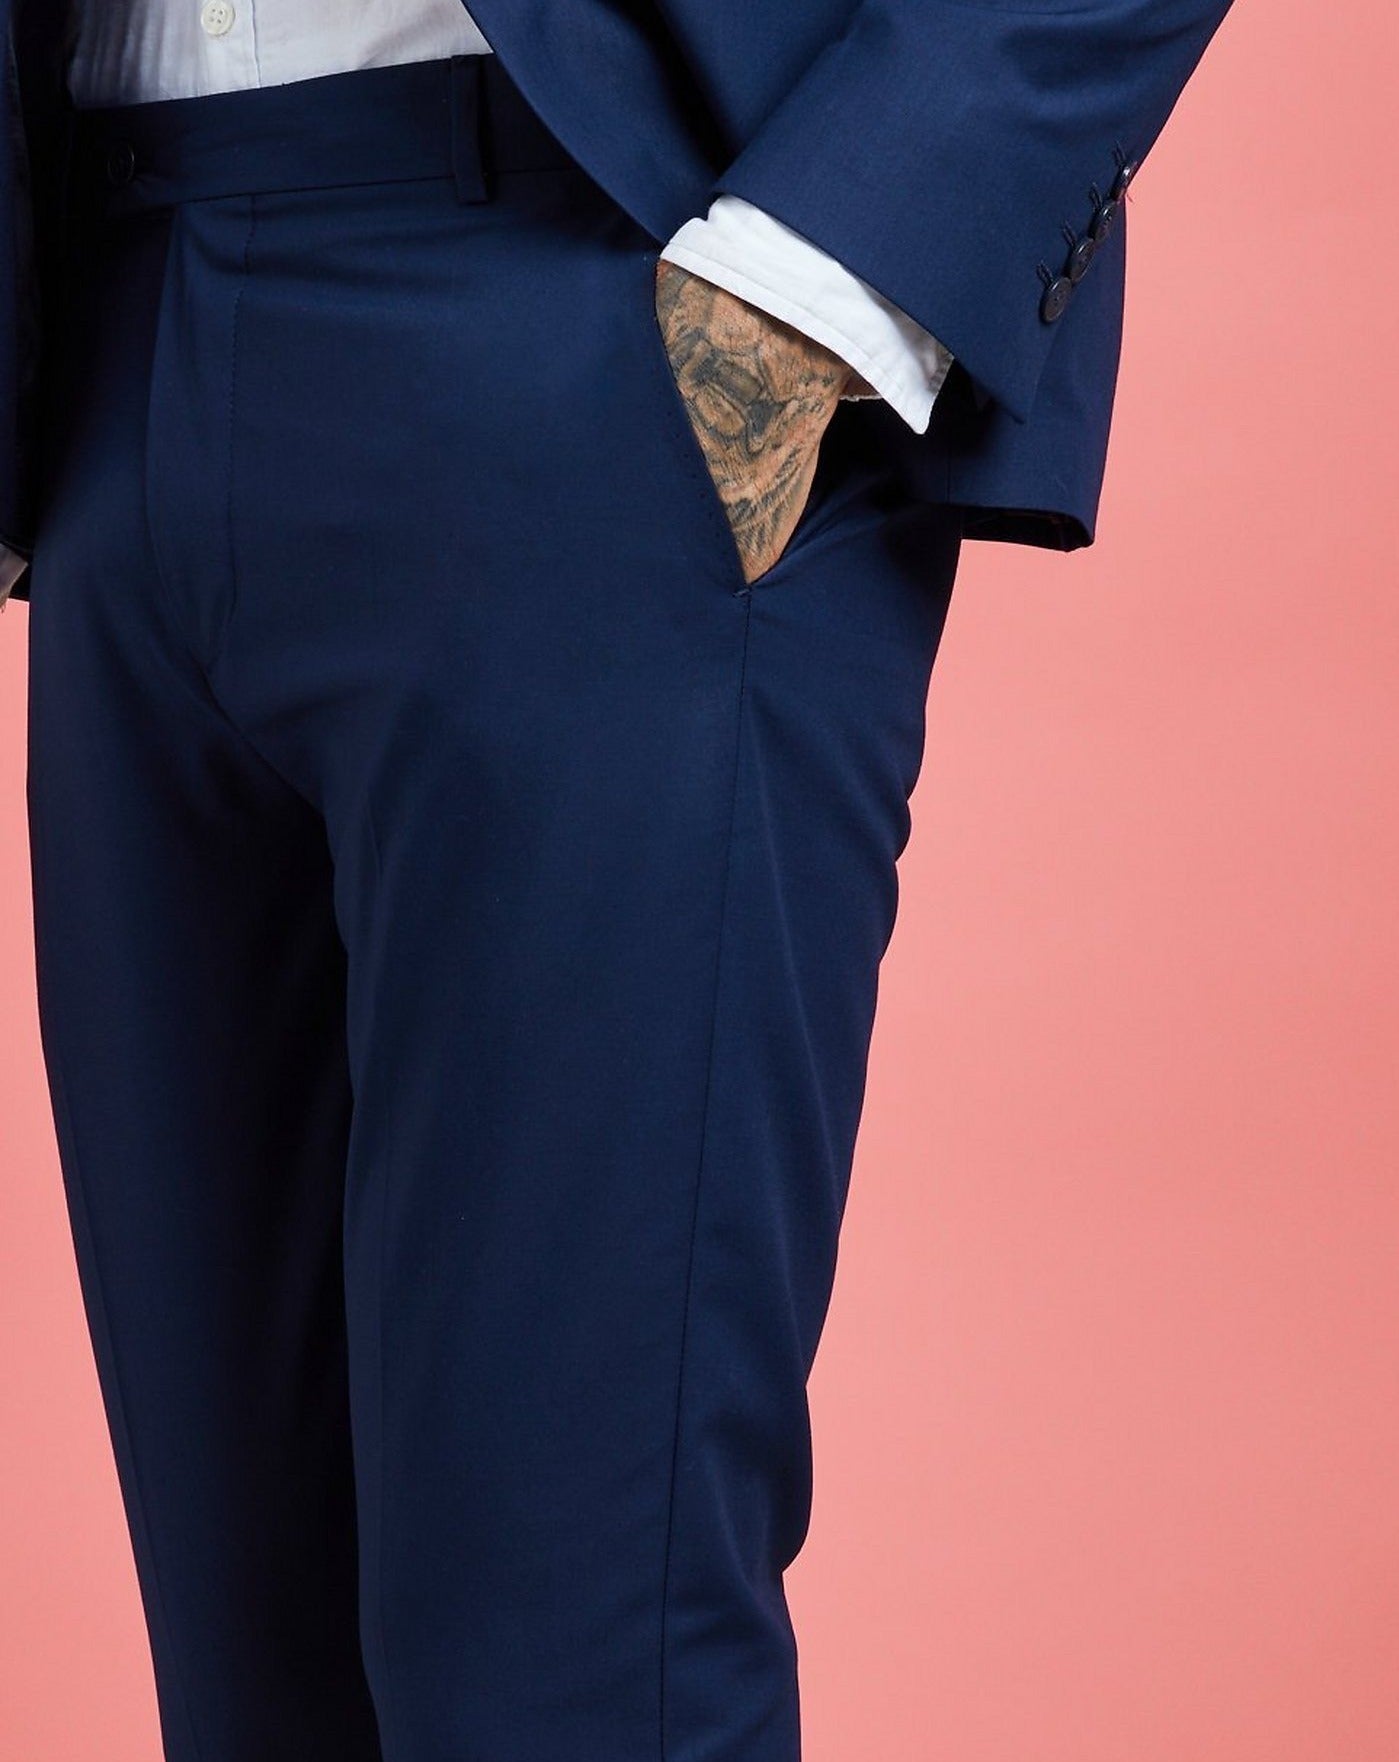 Linen Blend Slim Fit Suit Pants in Khaki 002  Hallensteins NZ